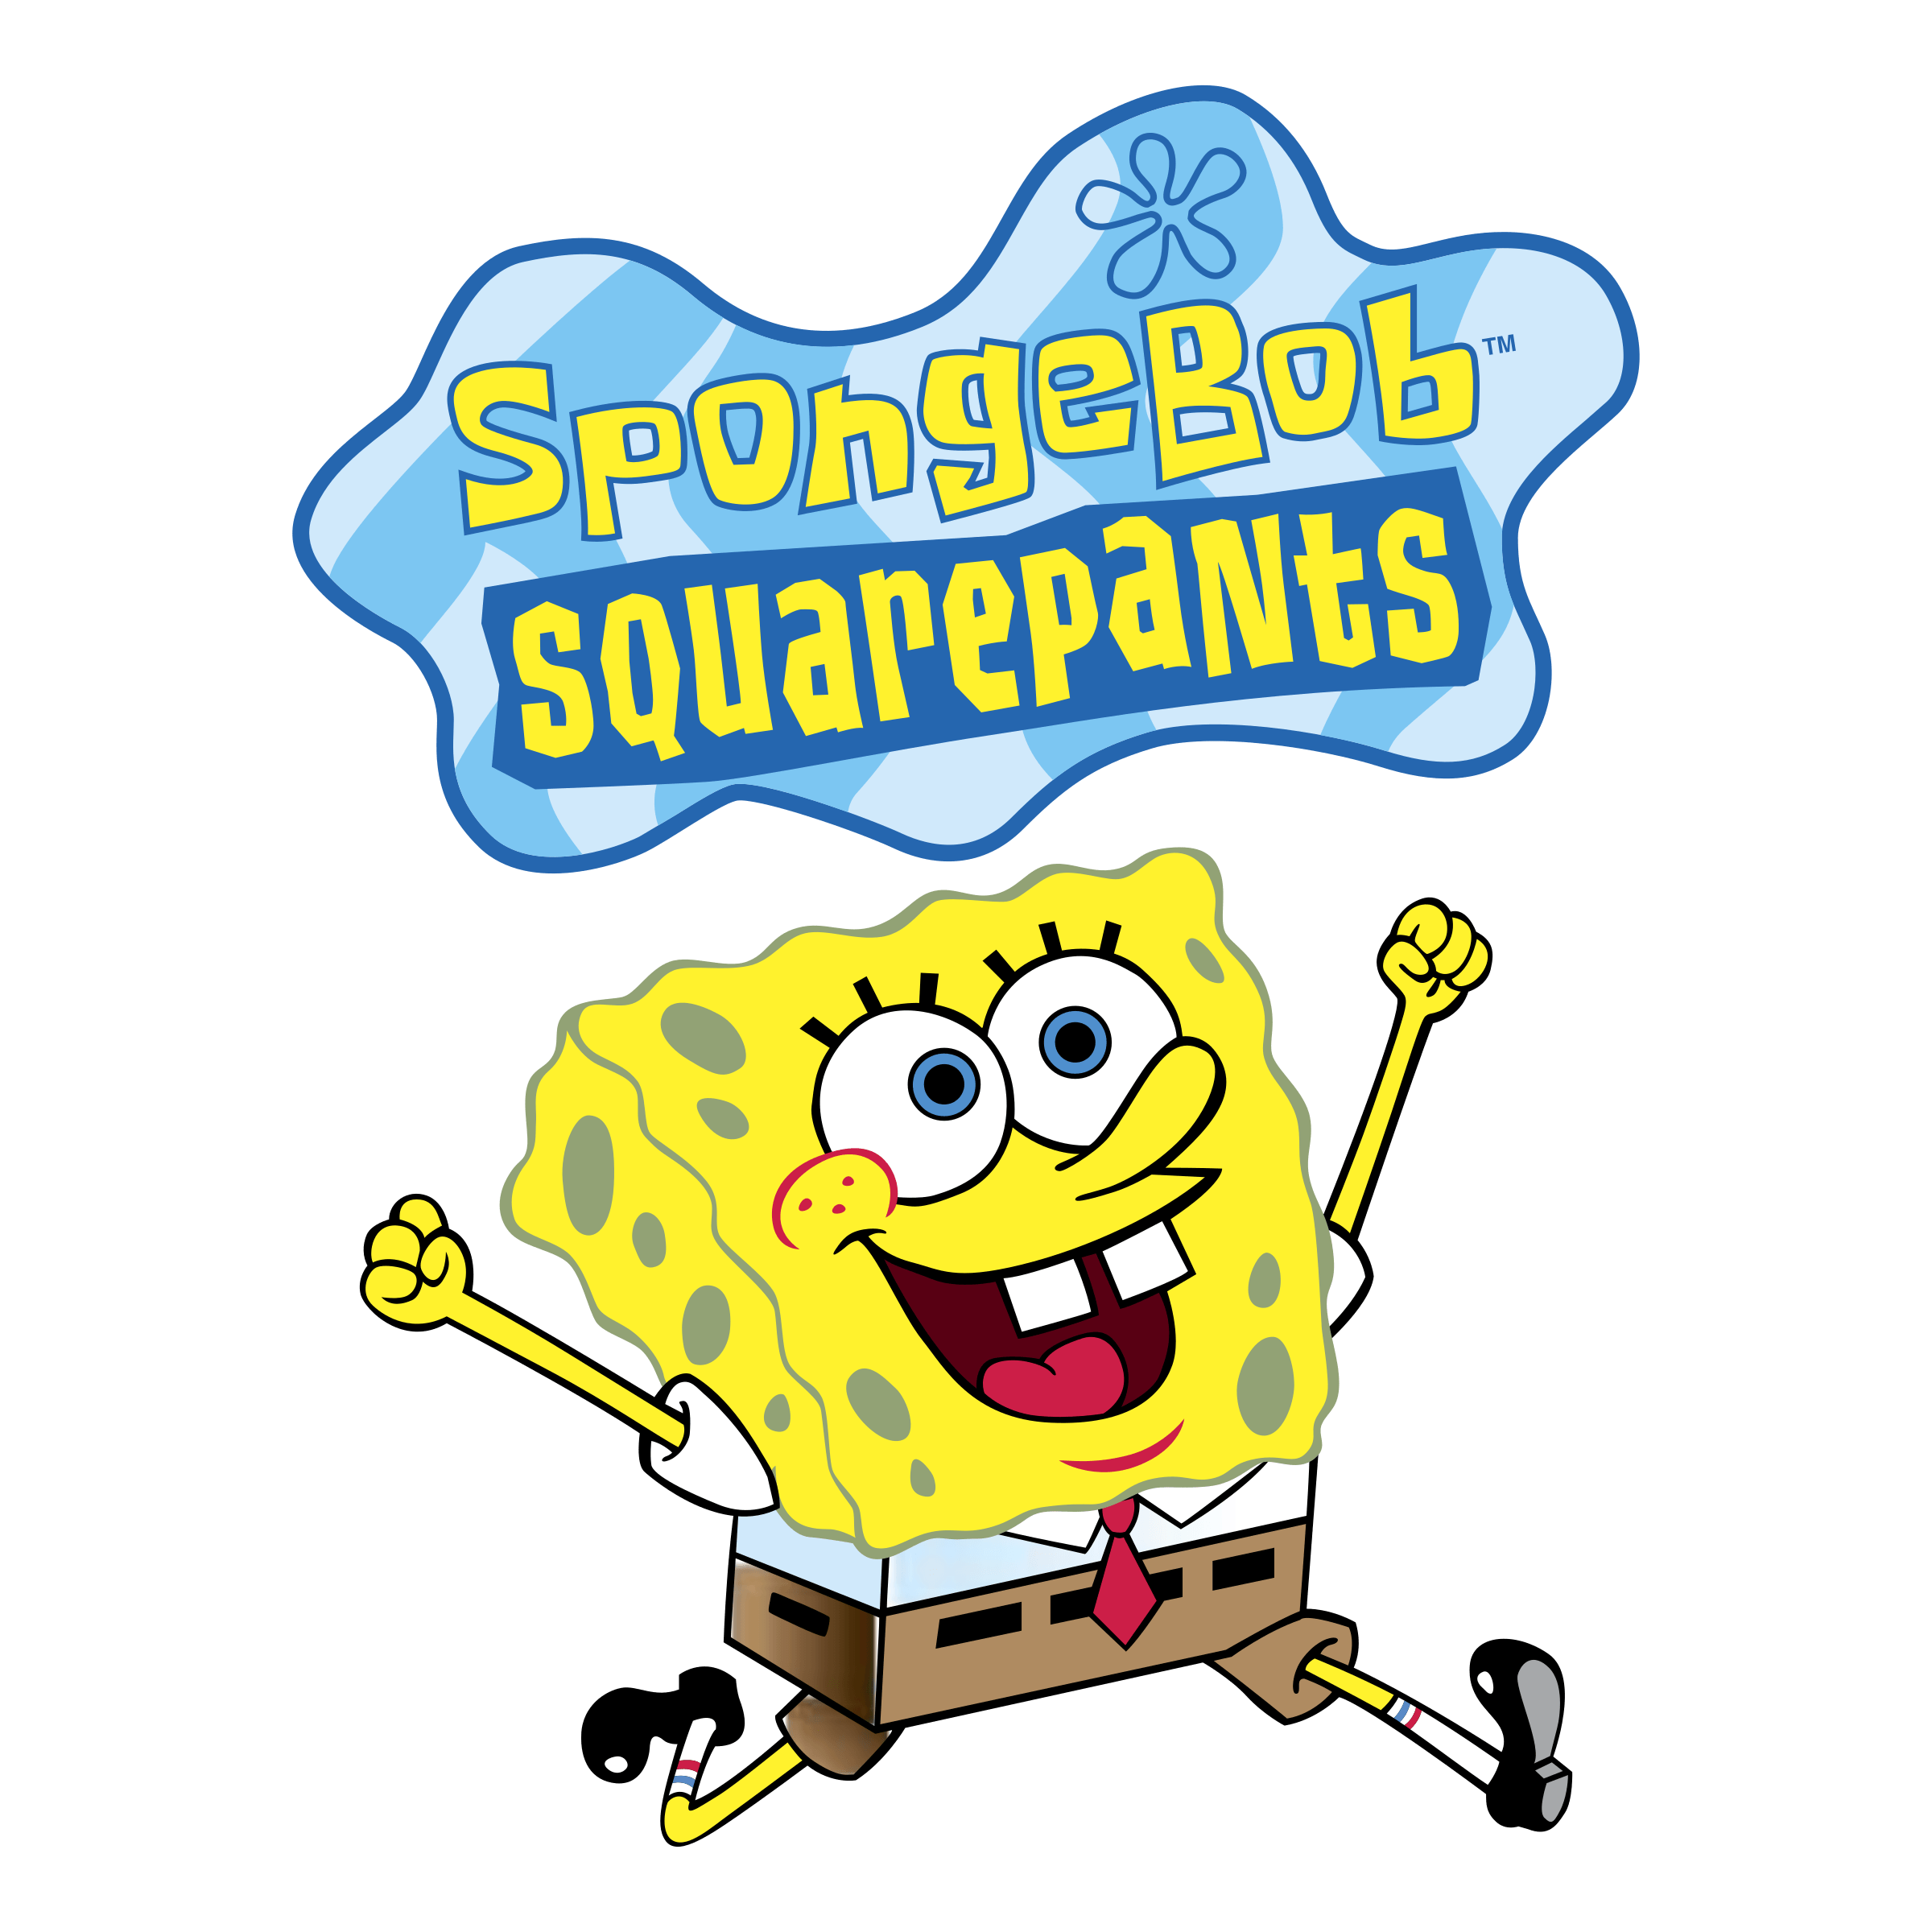 Spongebob SquarePants Logo - Spongebob Squarepants Logo PNG Transparent & SVG Vector